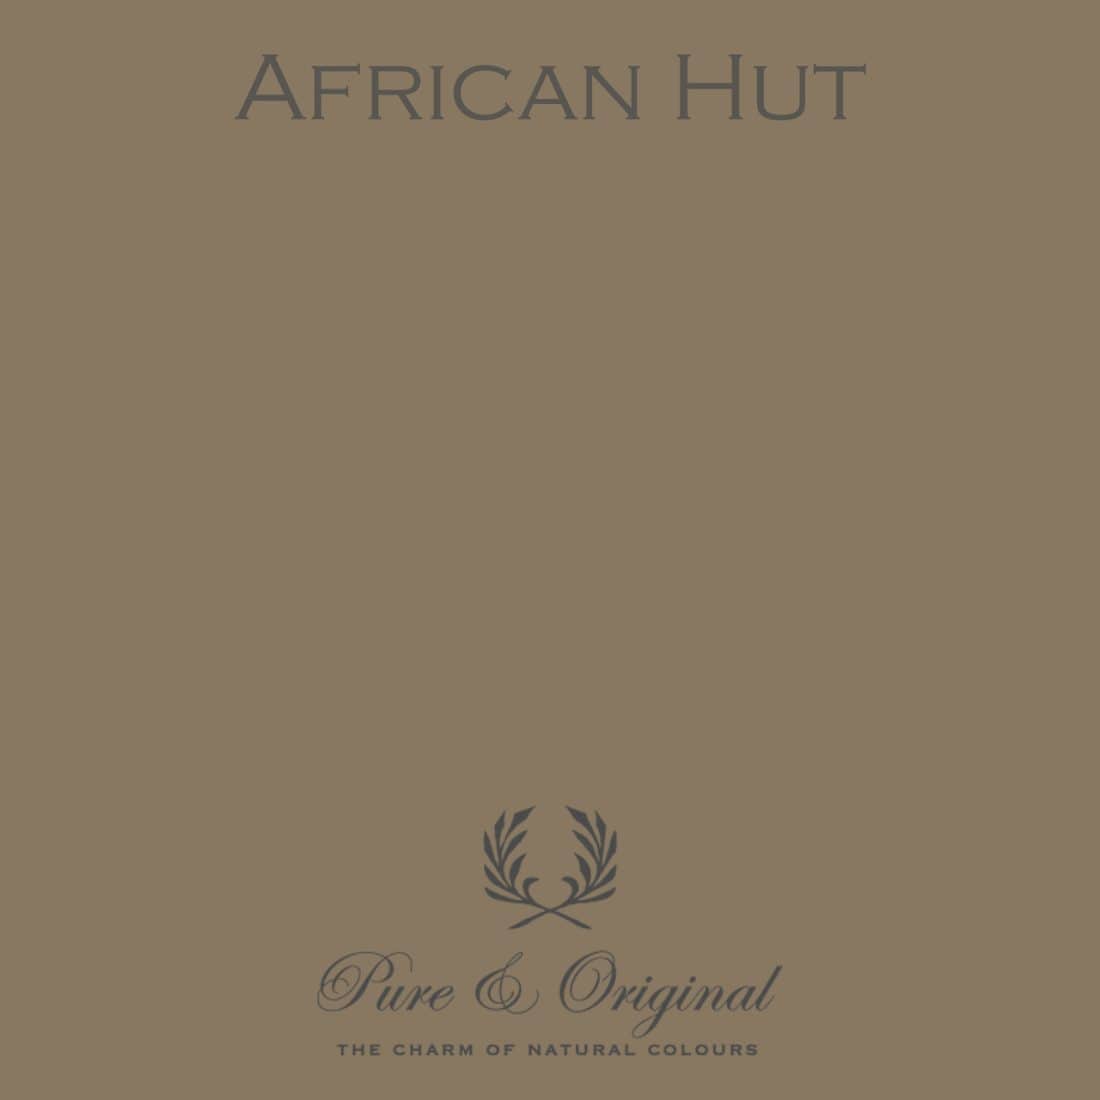 African Hut Pure Original